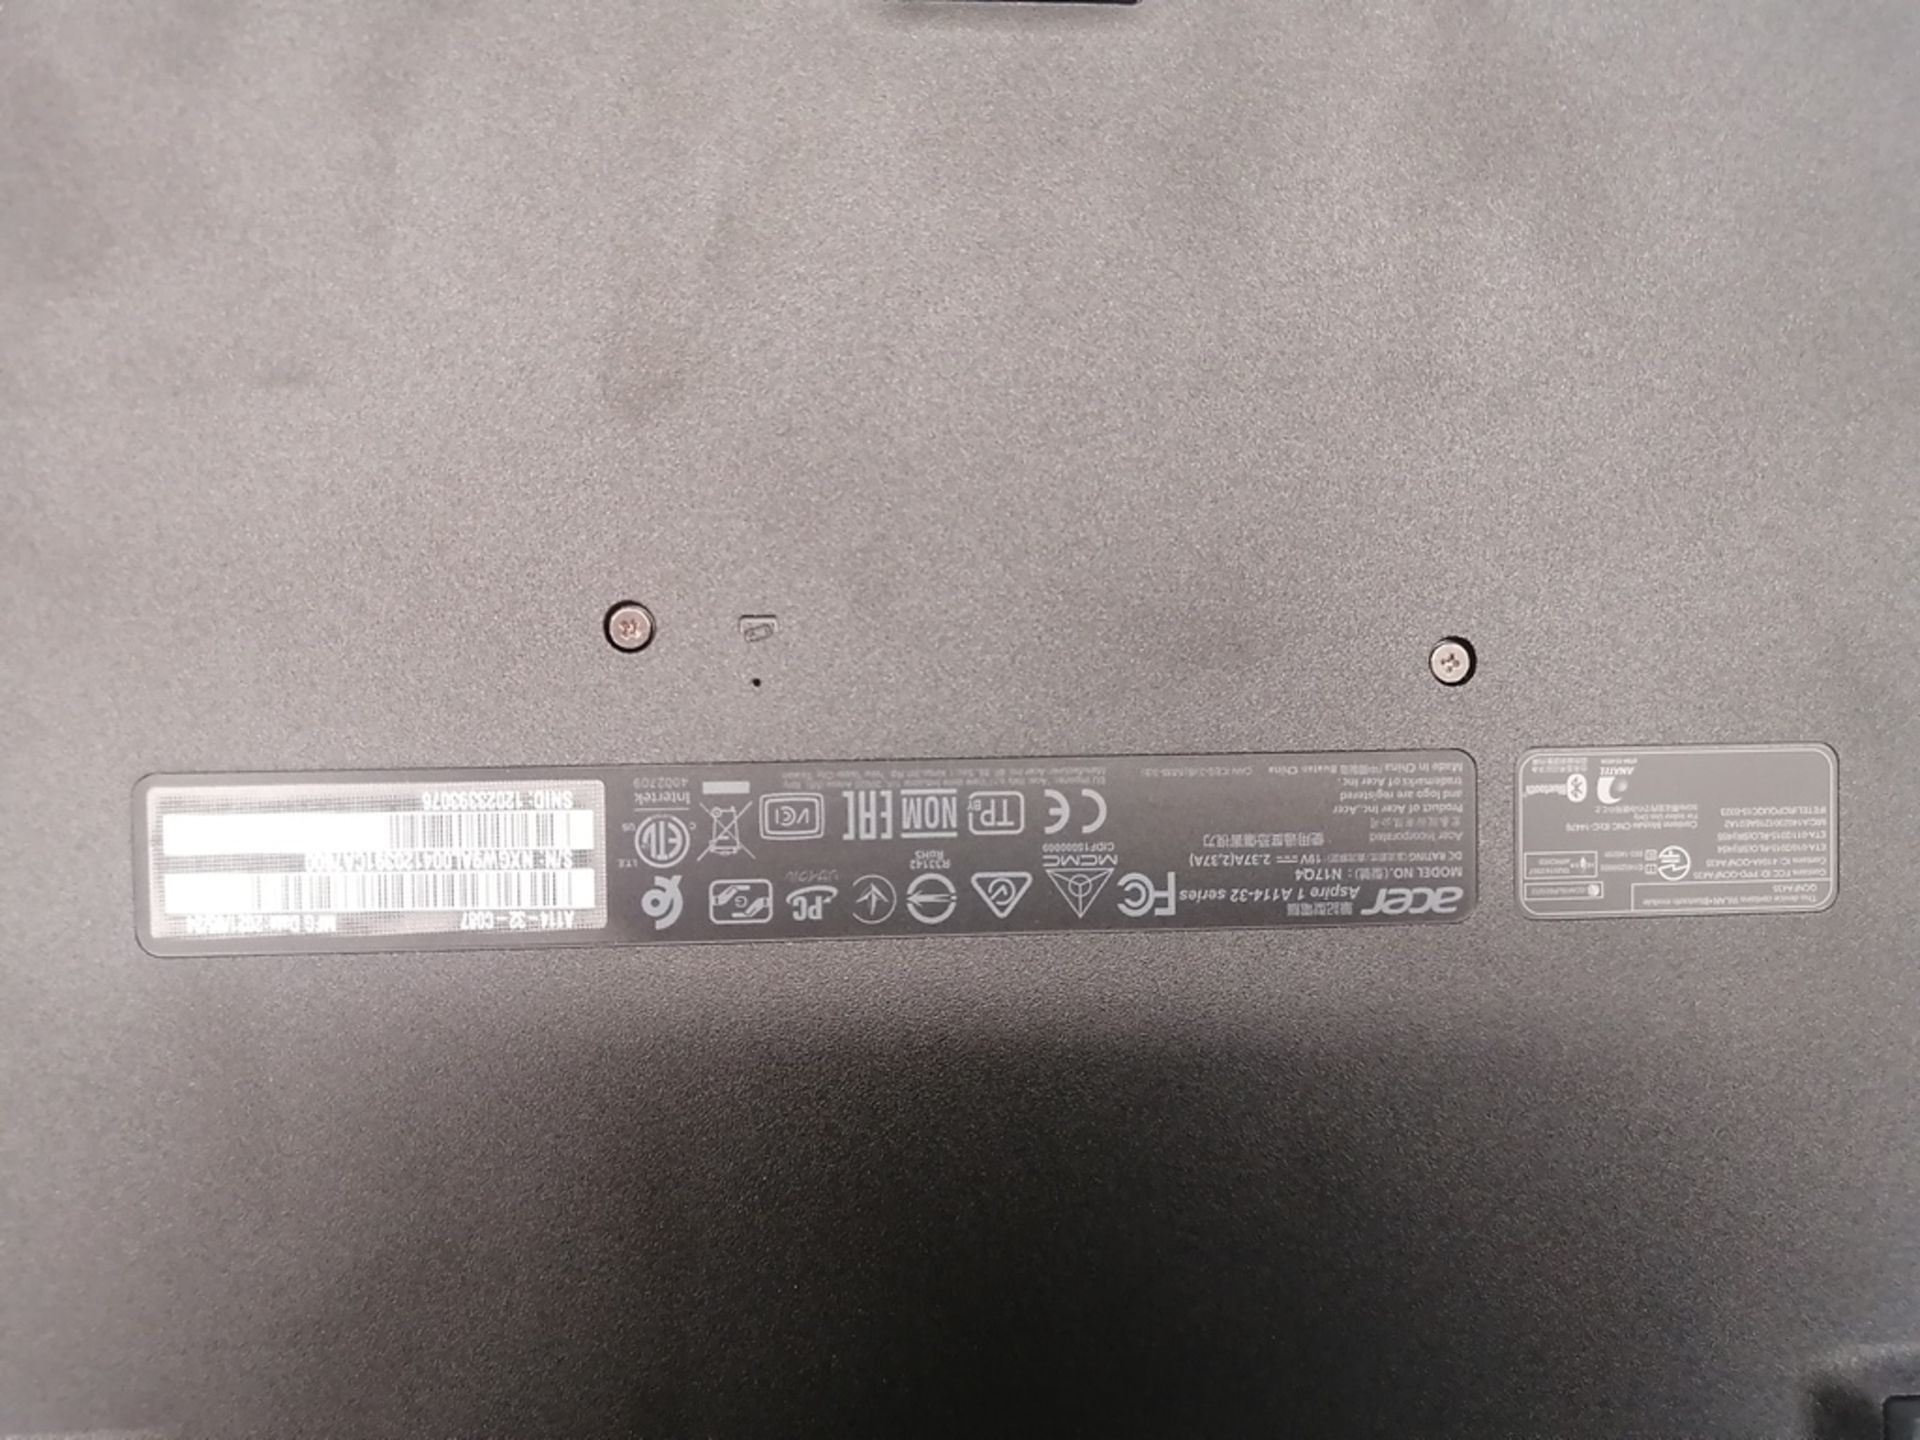 1 Computadora tipo Laptop marca Acer Modelo Aspire 114, Serie NXGW9AL004120391CA7600, Intel Celeron - Image 4 of 5